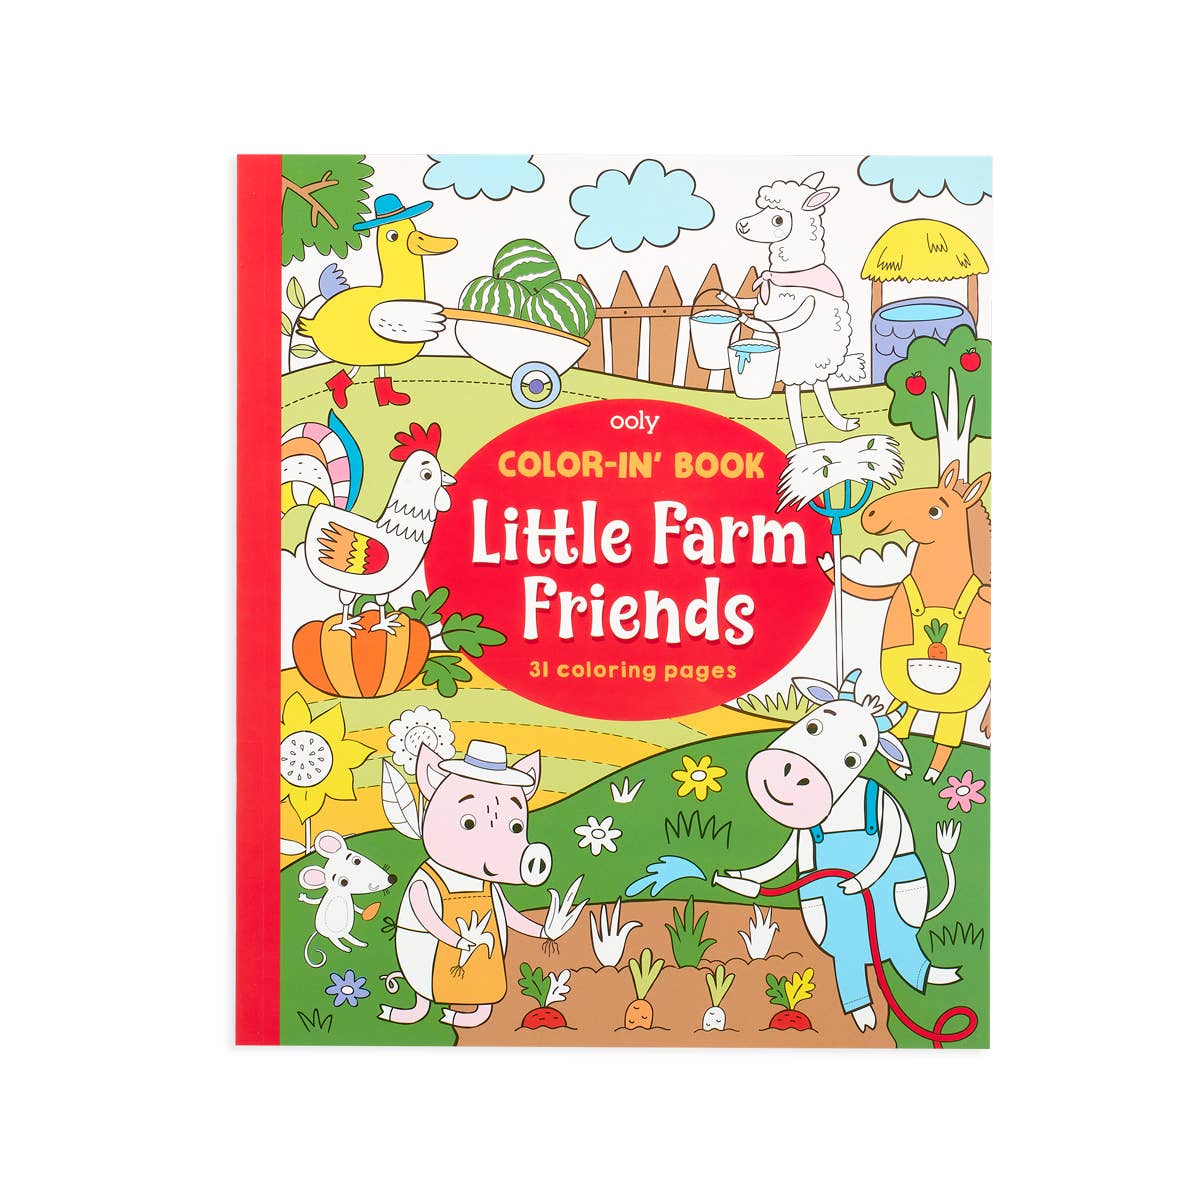 Color-in' Book- Little Farm Friends